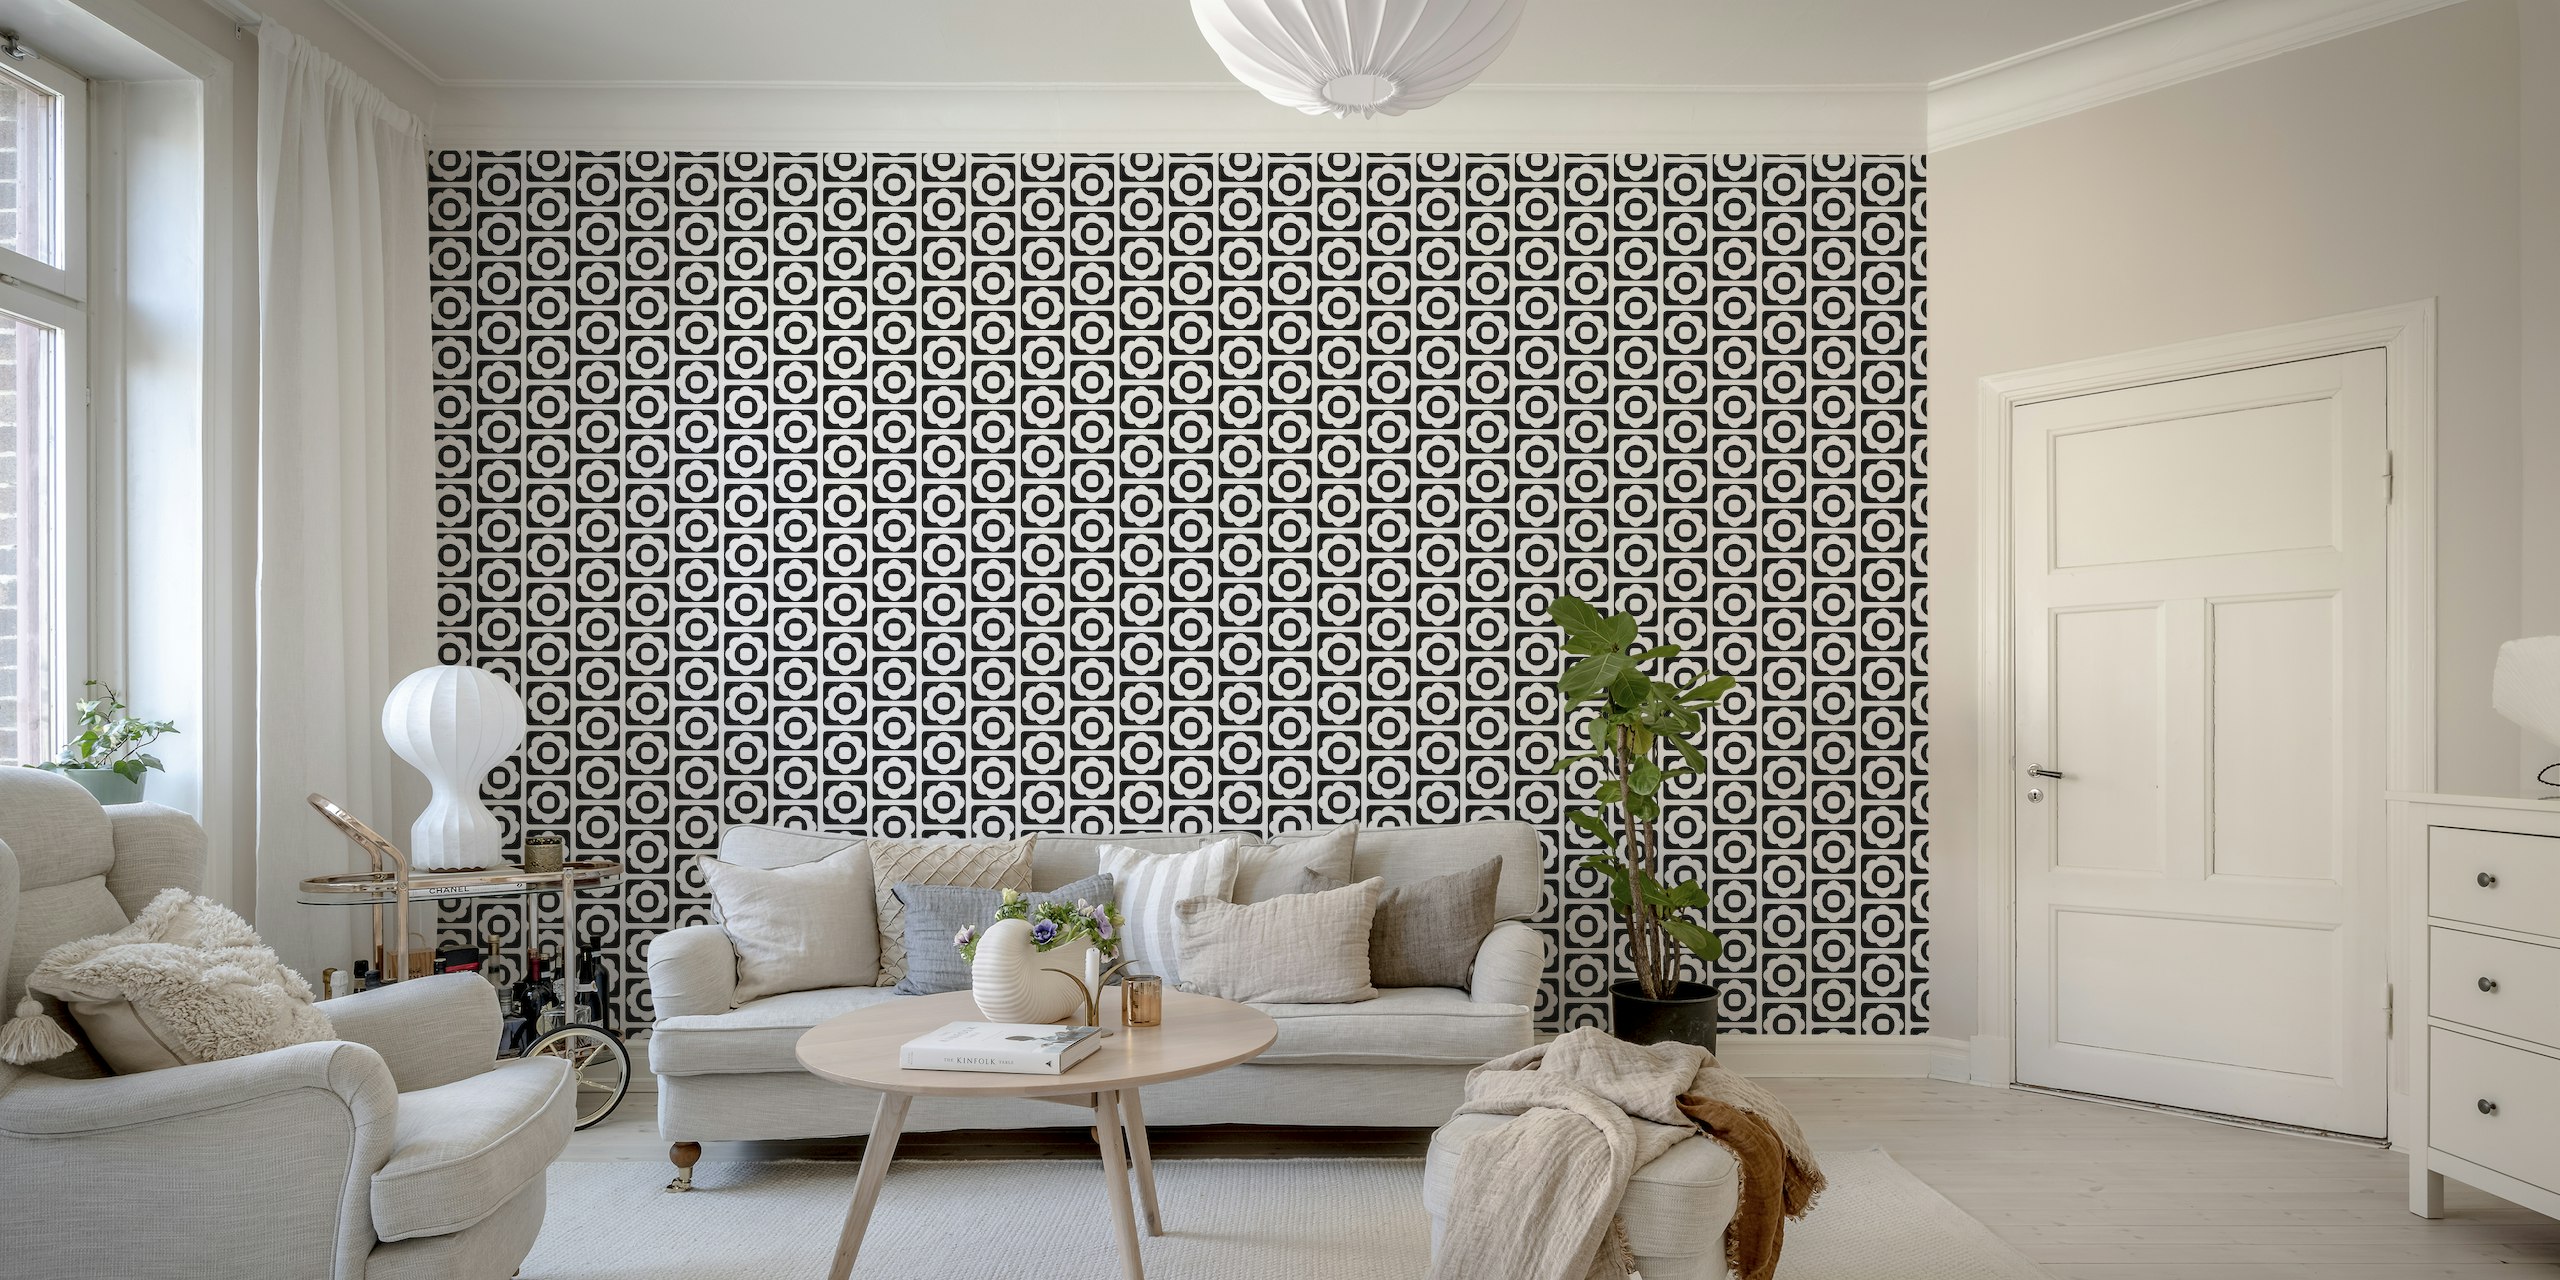 2689 E - black and white floral tiles wallpaper